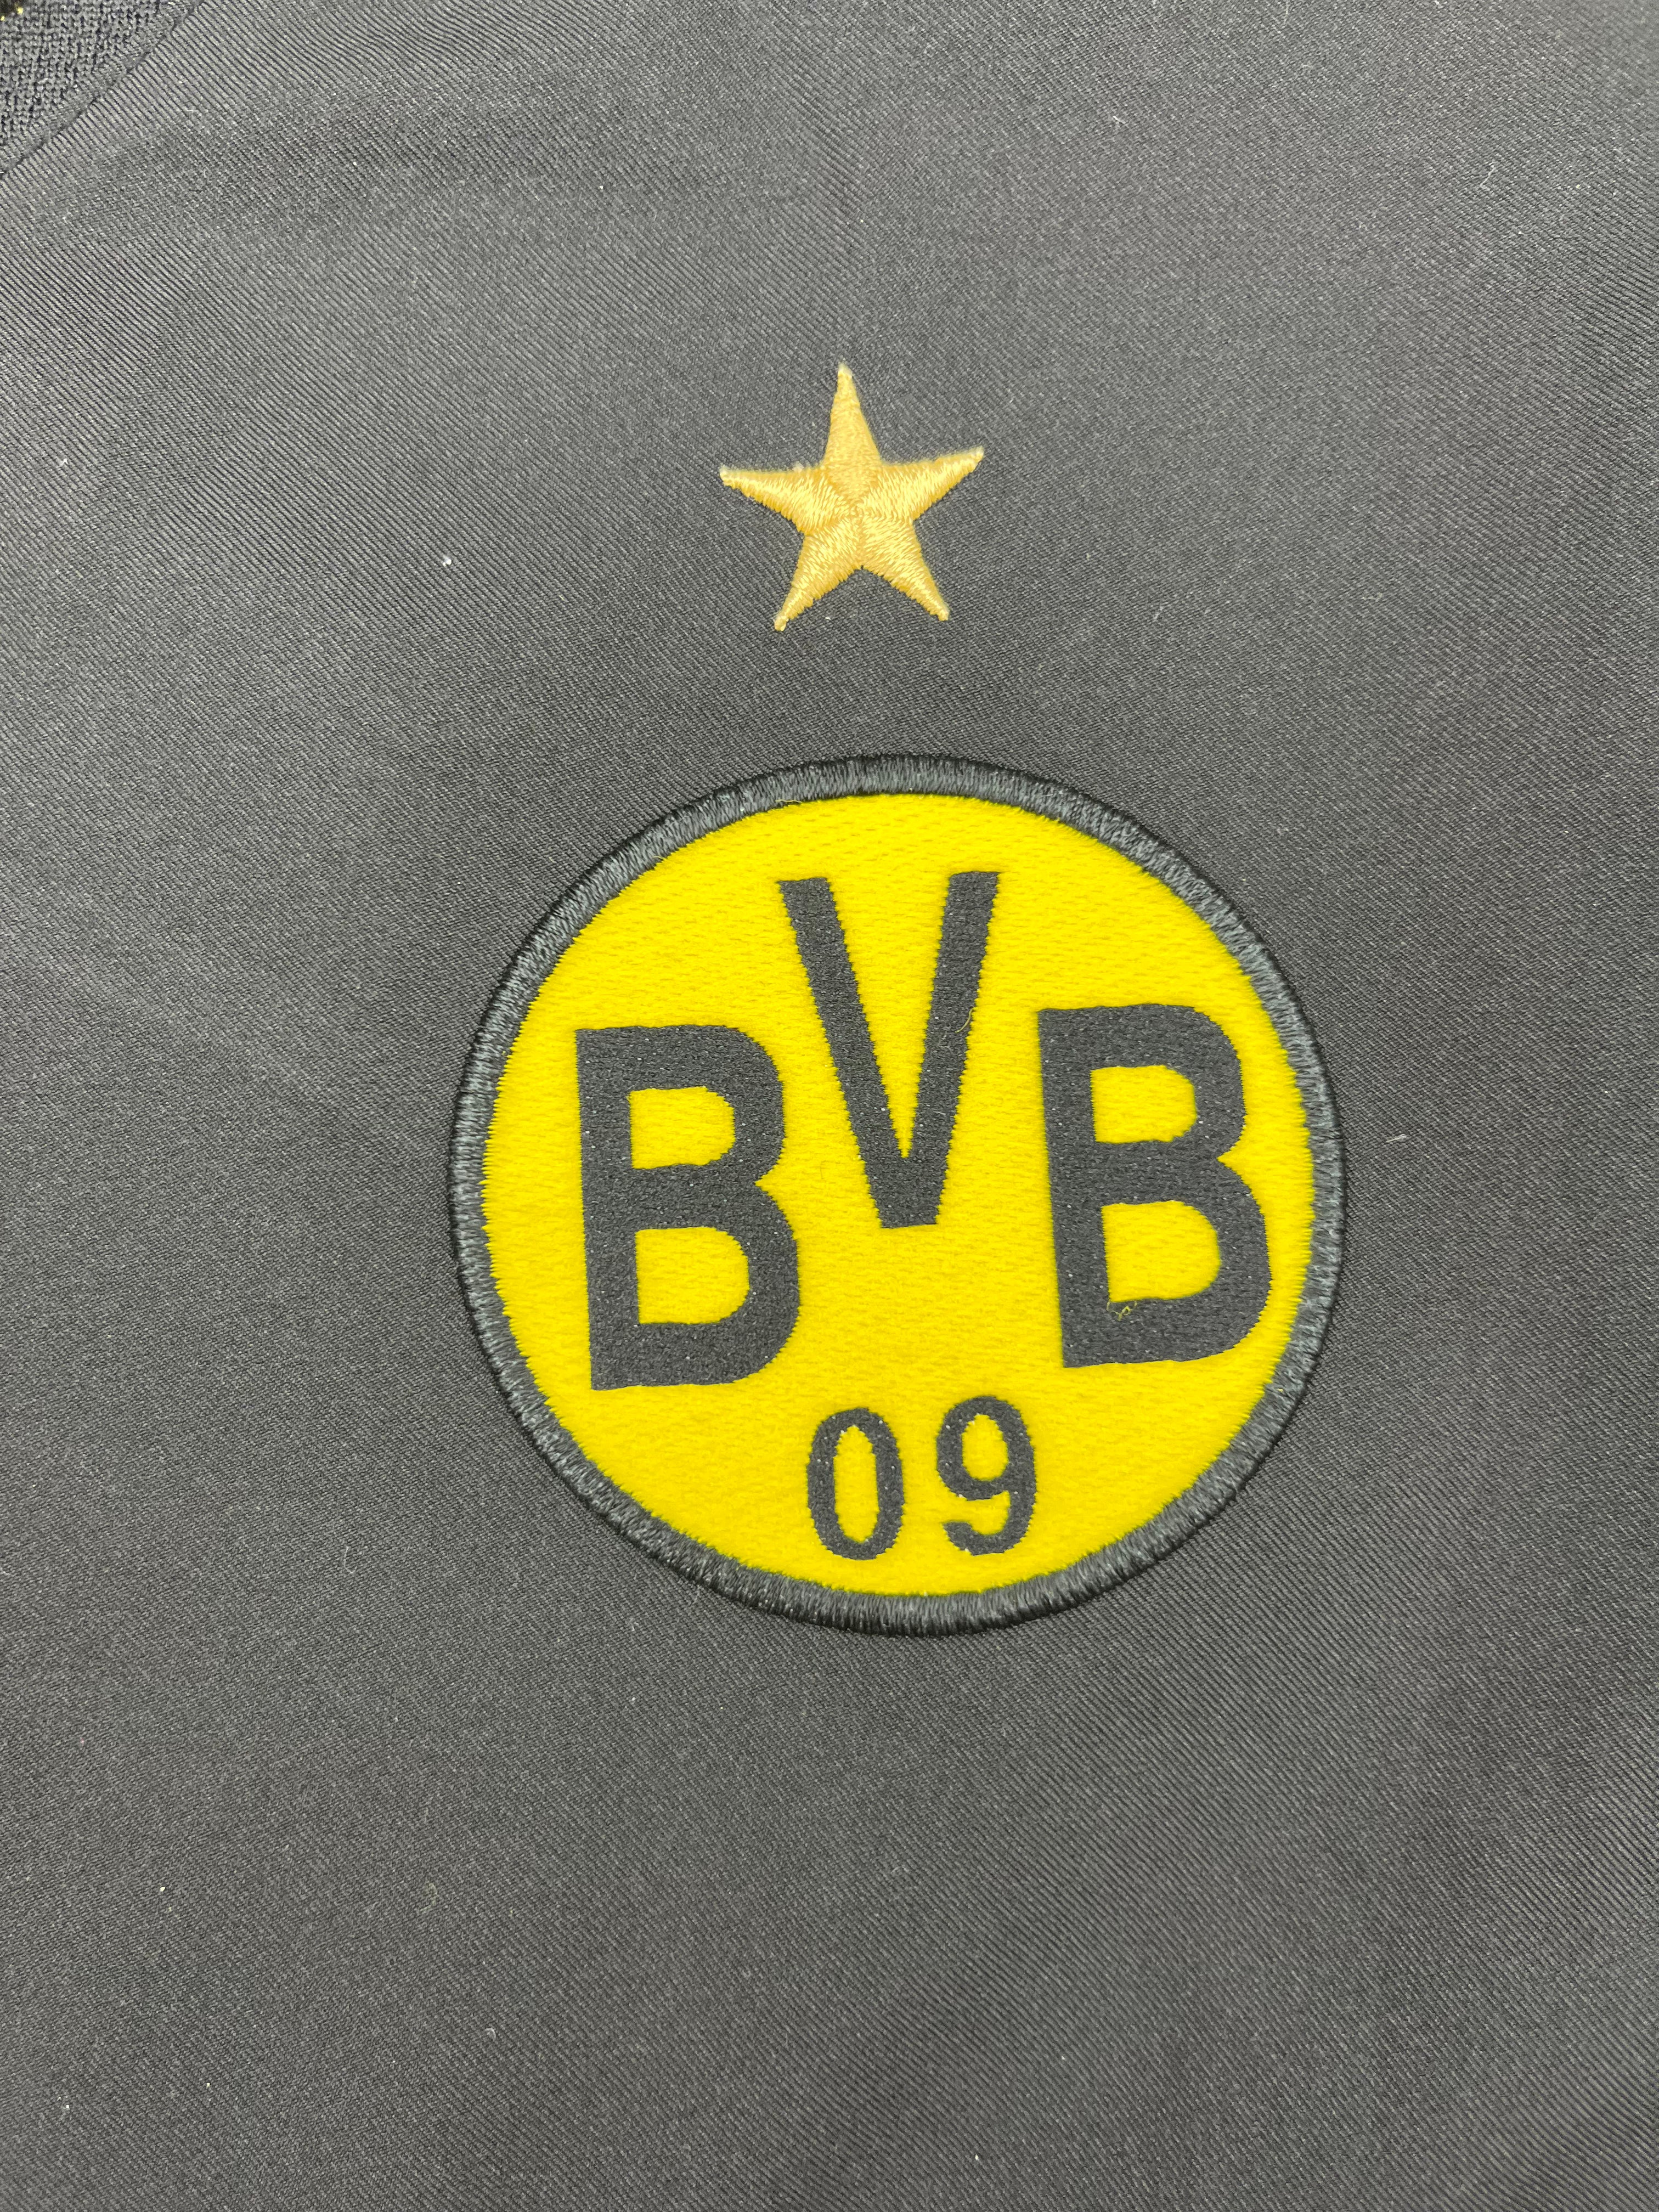 2004/05 Borussia Dortmund Away Shirt #10 (XL) 9/10